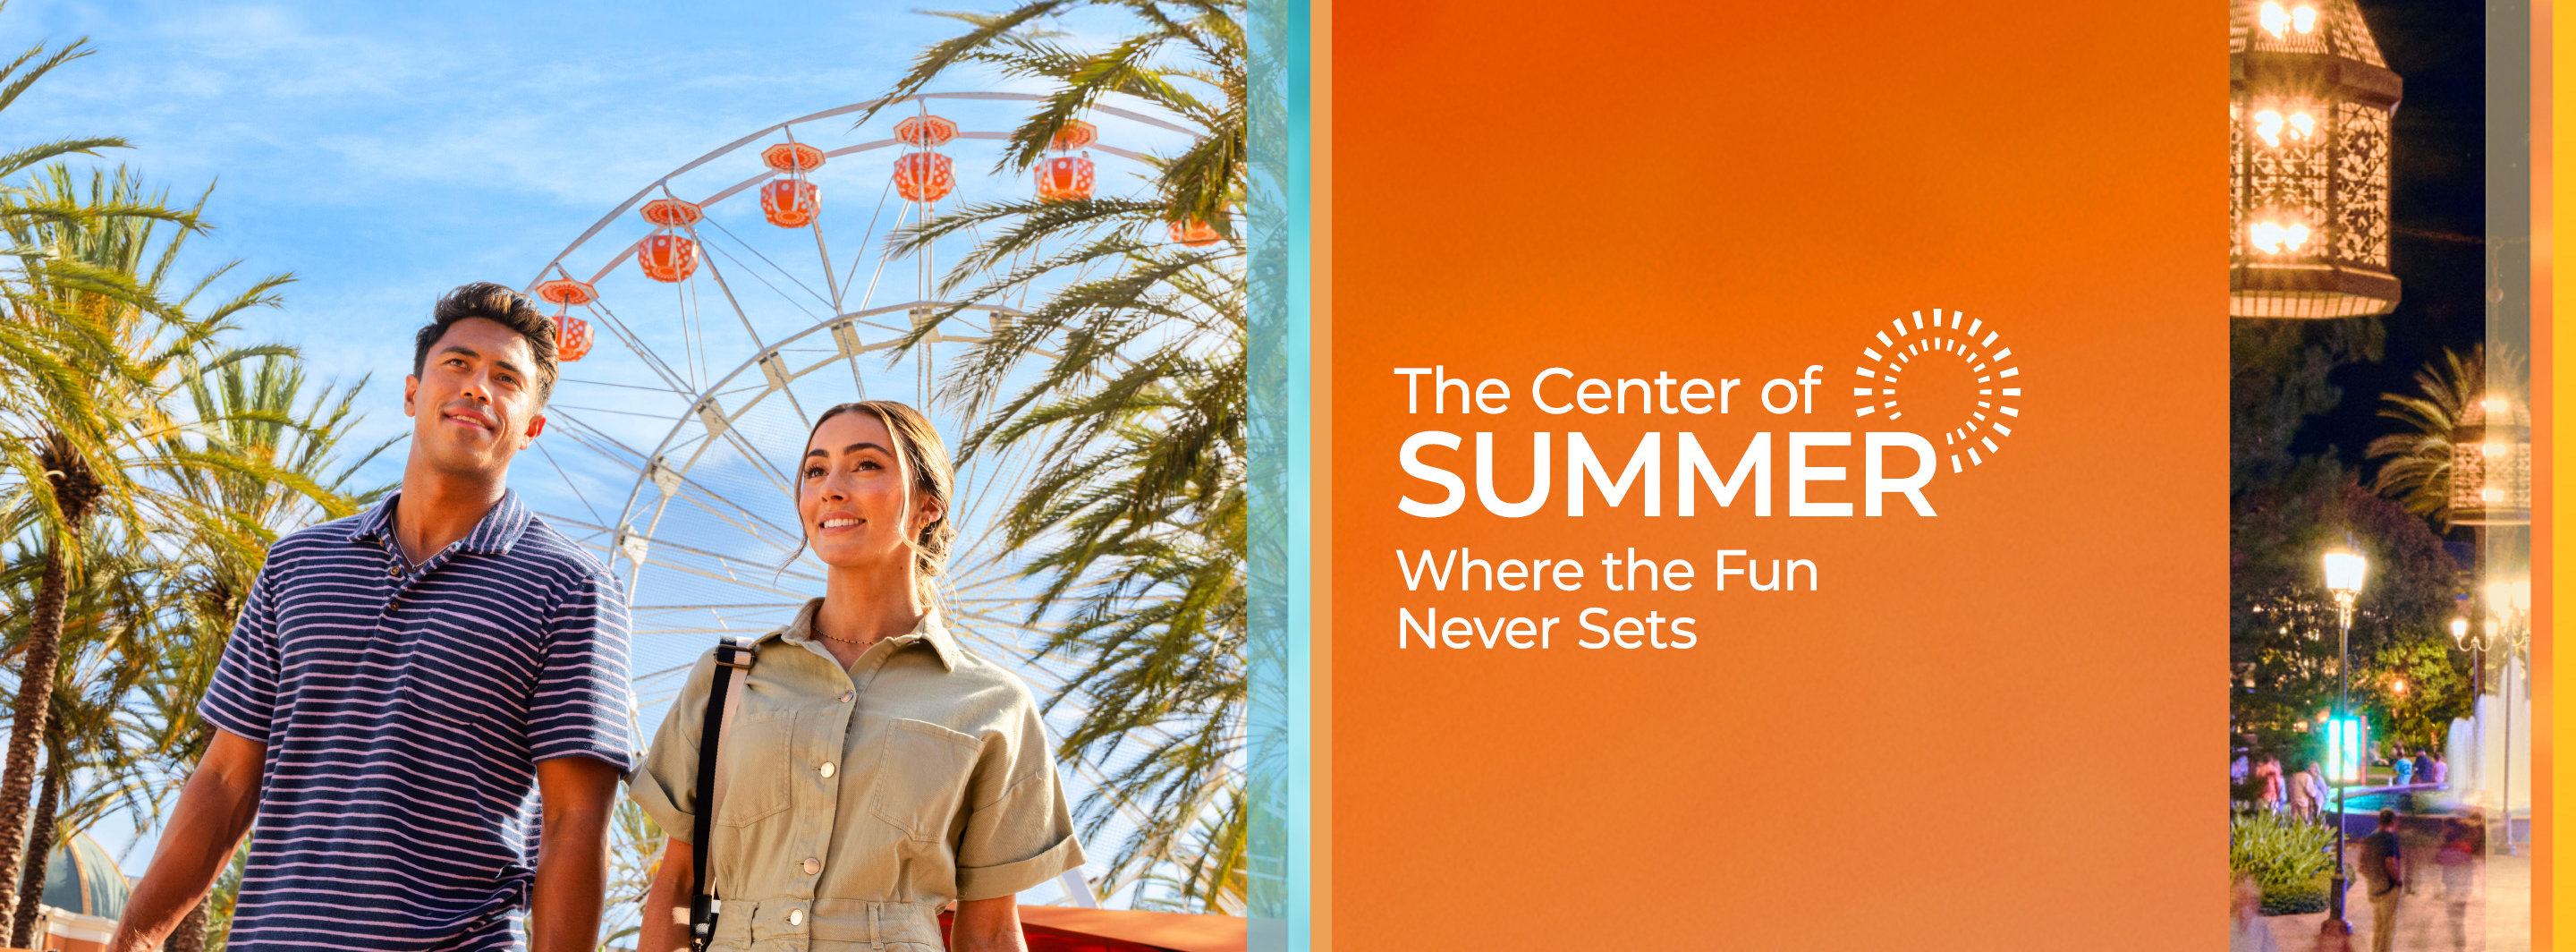 The Center of Summer at Irvine Spectrum Center